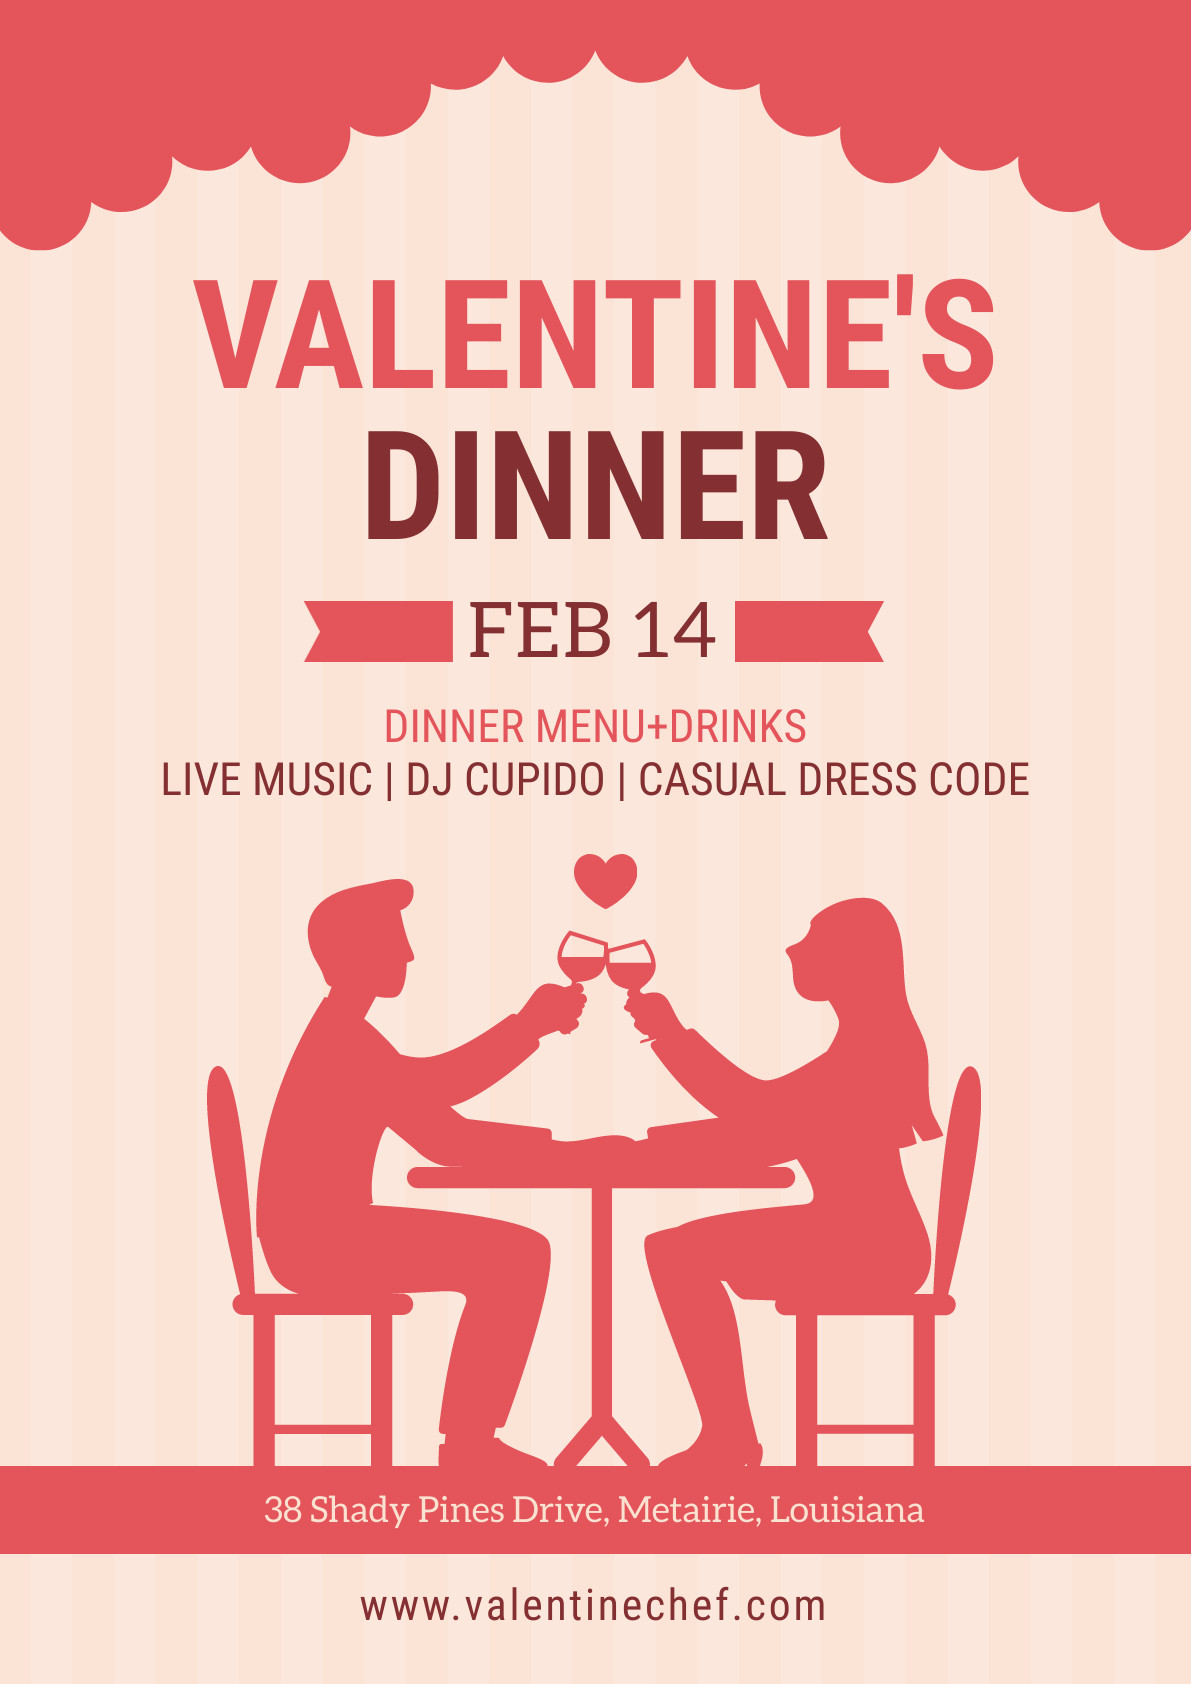 Valentine's Day Romantic Pink Dinner Poster 1191x1684